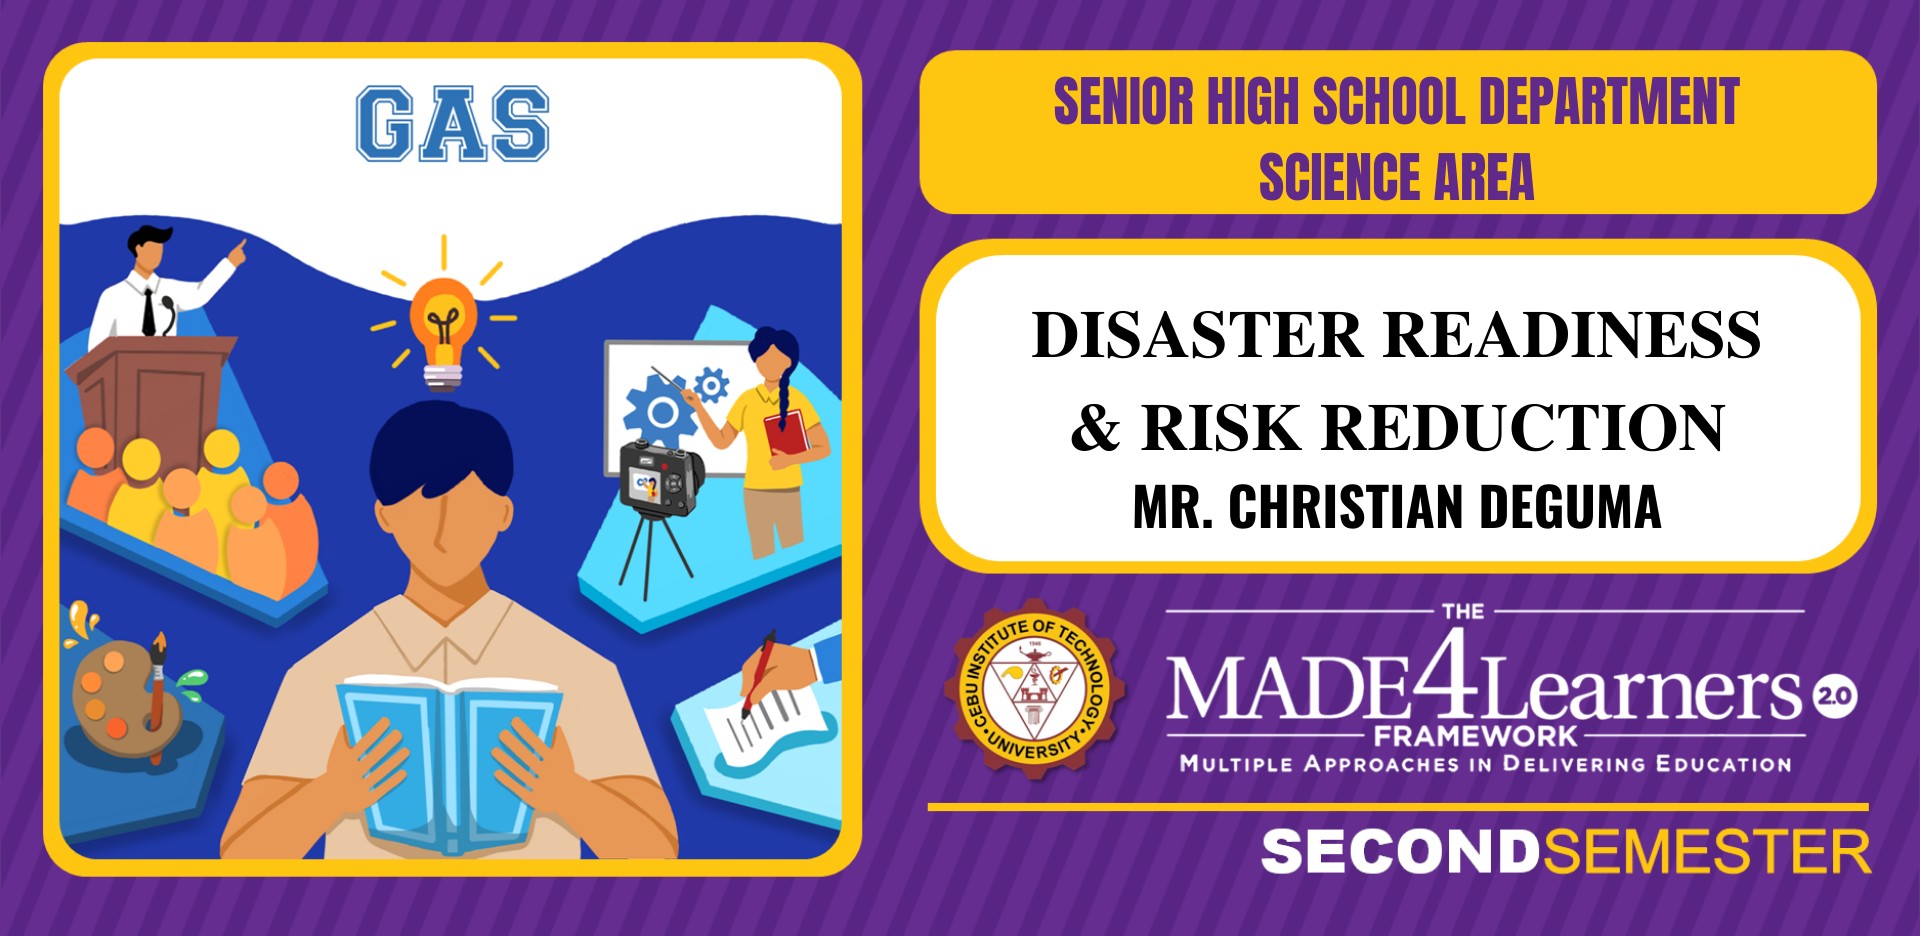 DRRR11 : Disaster Readiness and Risk Reduction (Deguma)